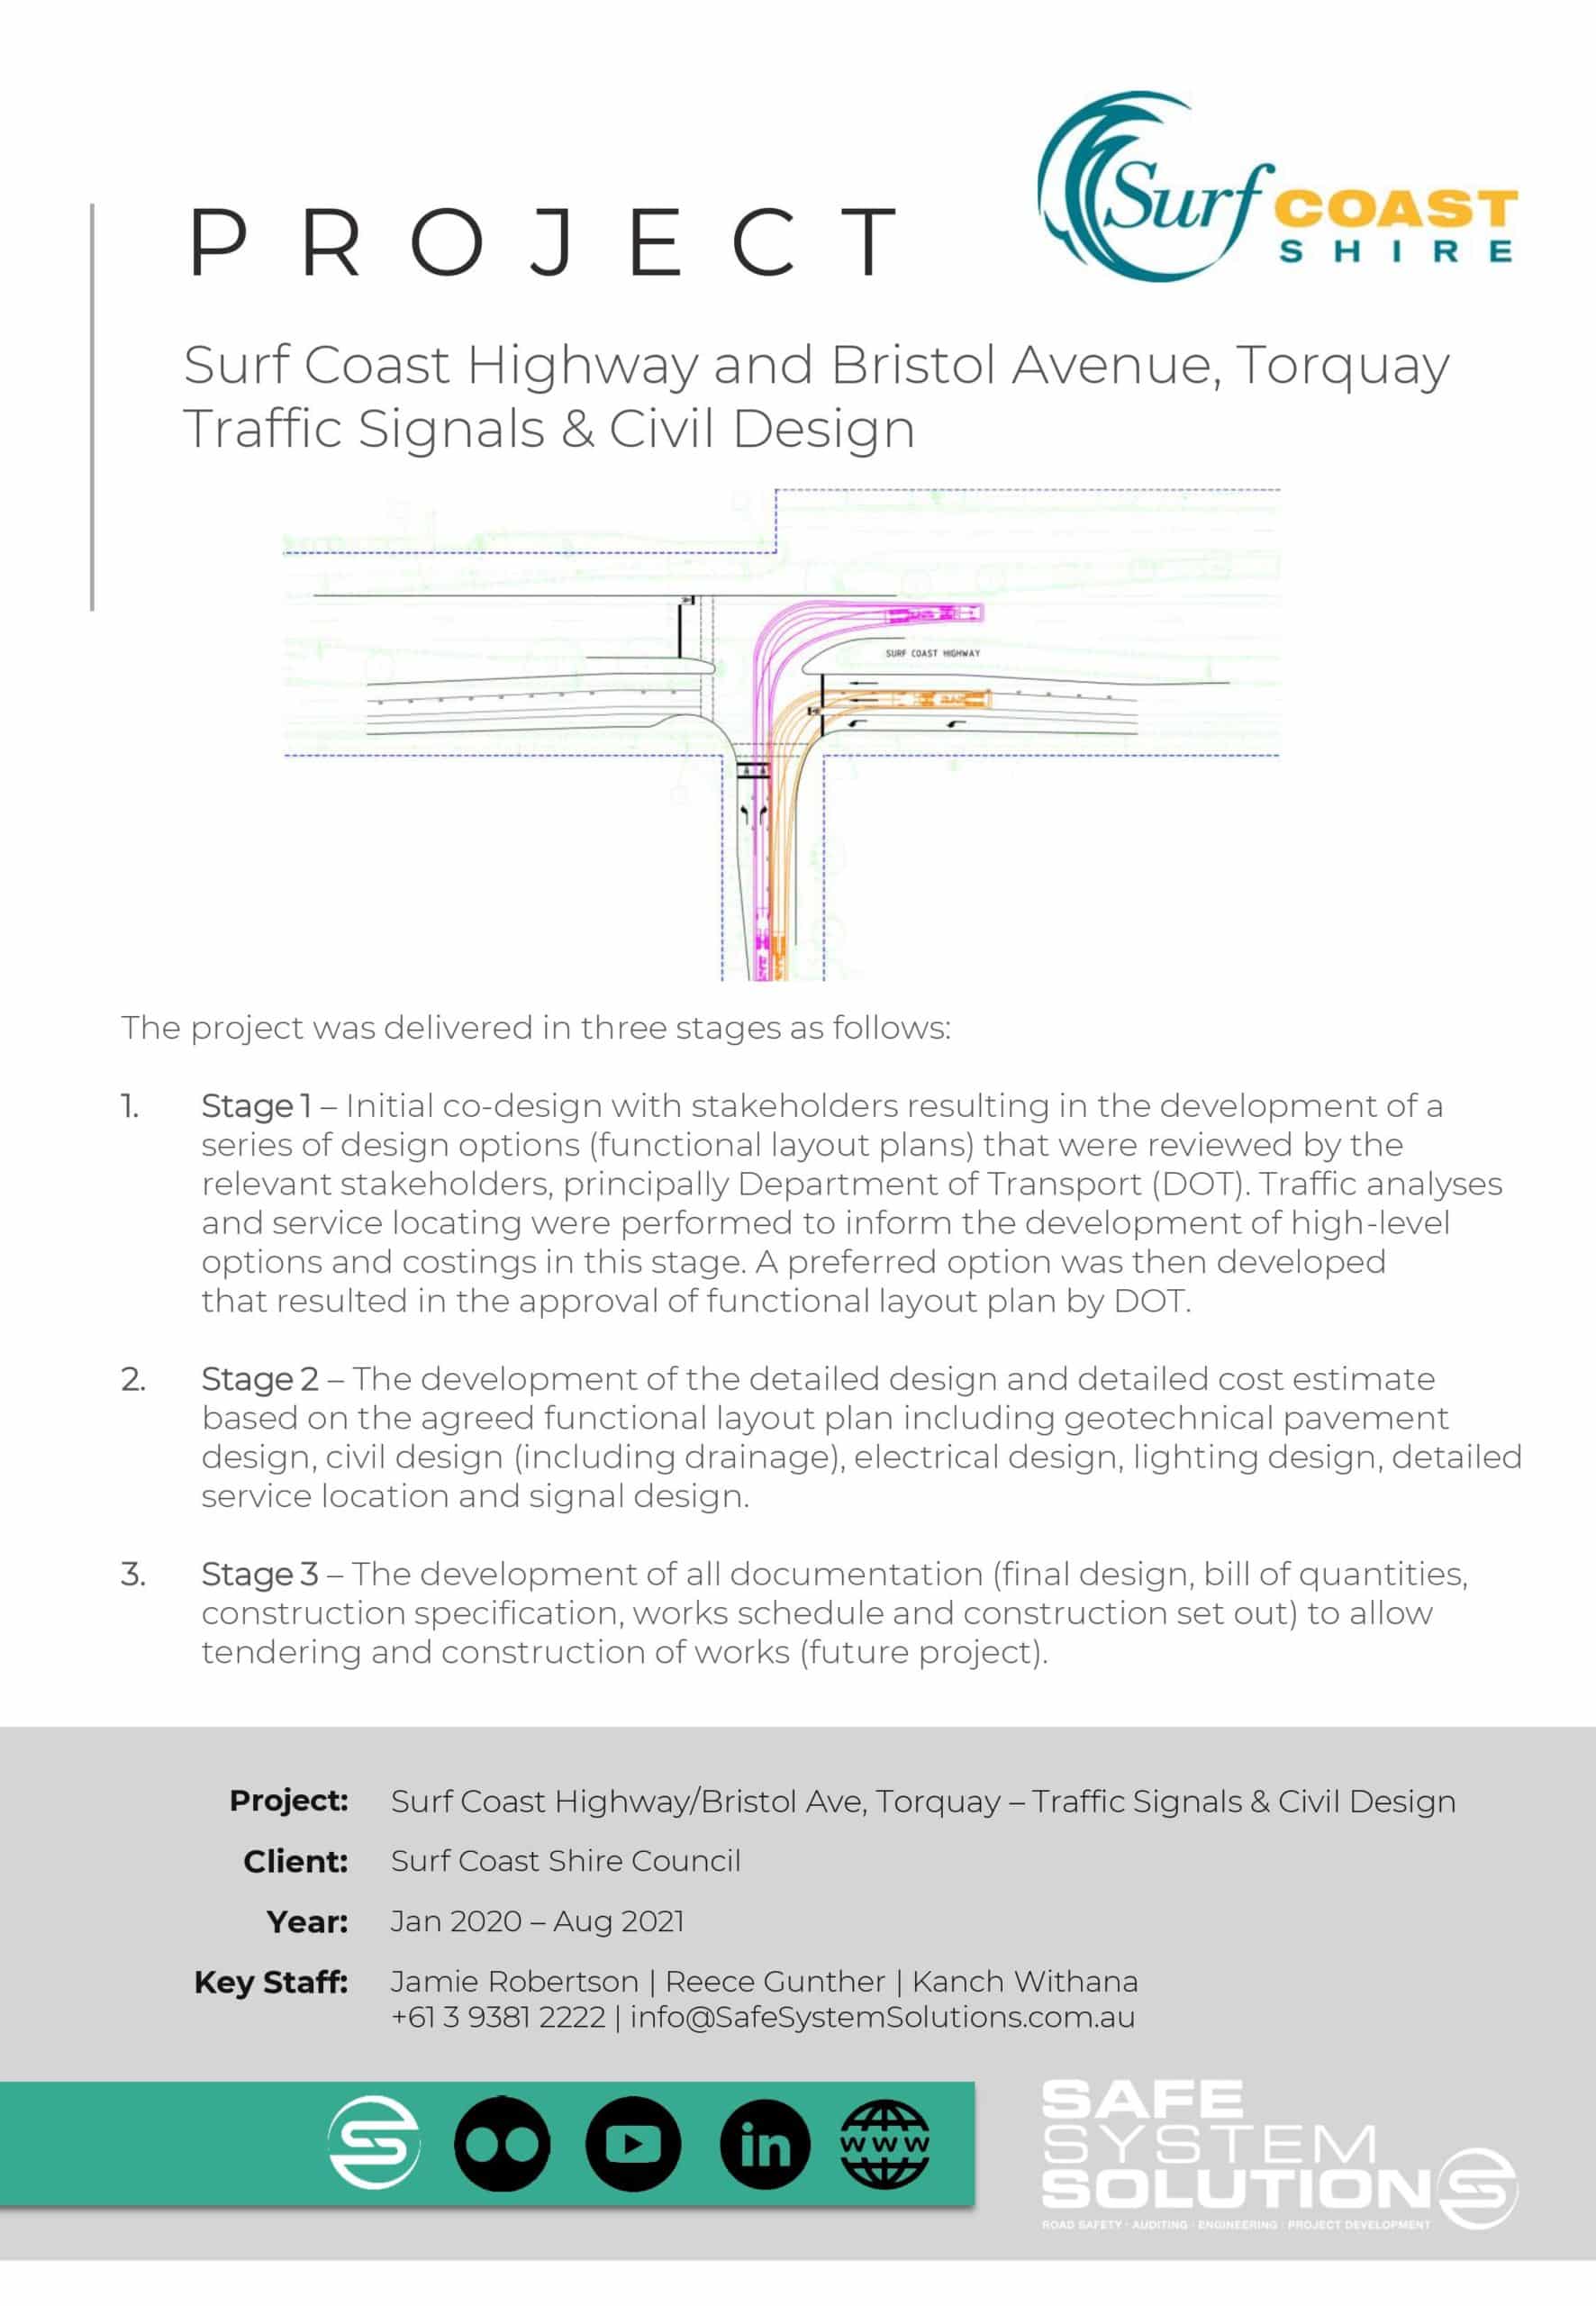 Surf Coast Highway and Bristol Avenue, Torquay Traffic Signals & Civil Design